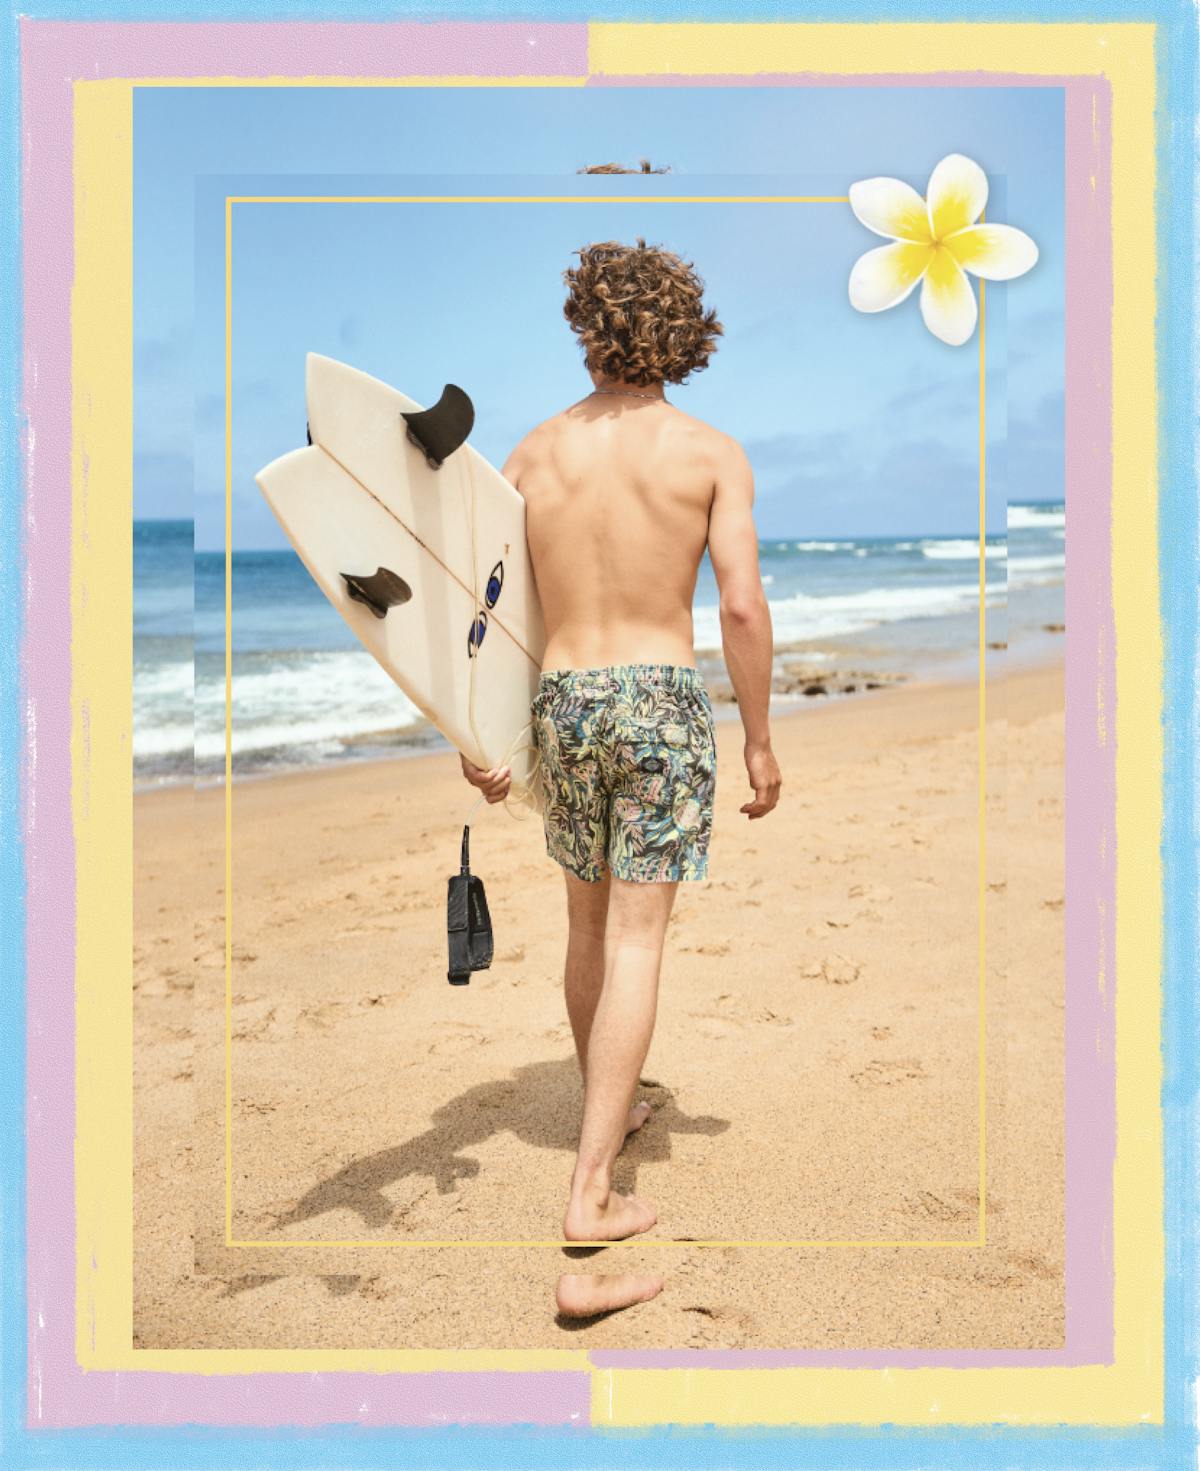 Teen boys with his surfboard at the beach wearing ghanda board shorts 